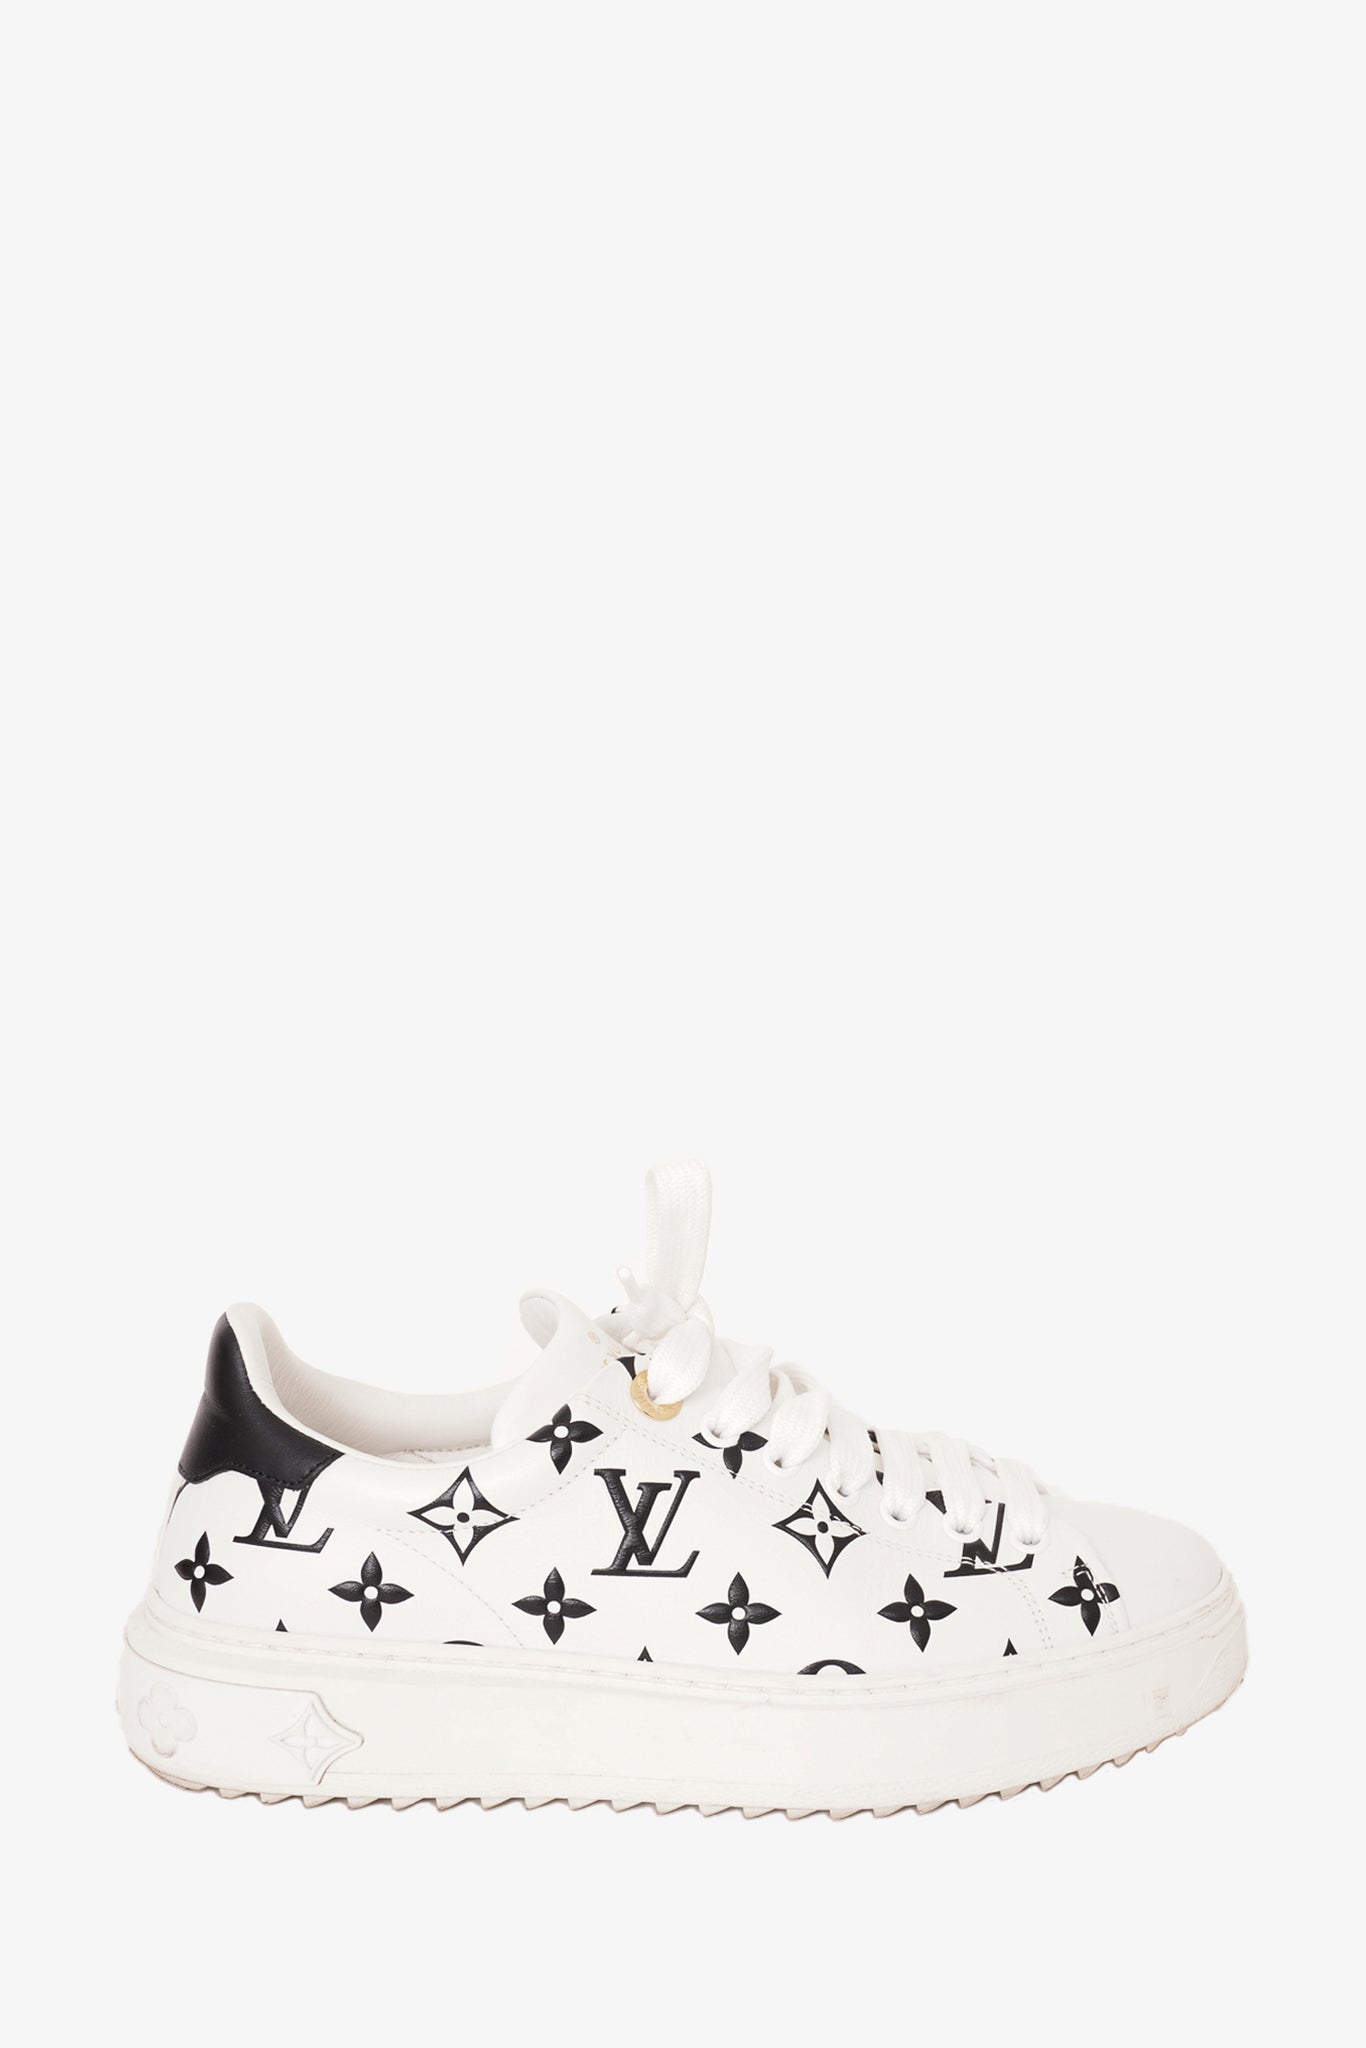 Louis Vuitton, Shoes, Louis Vuitton White Time Out Sneakers Size 37 Logo  Lv